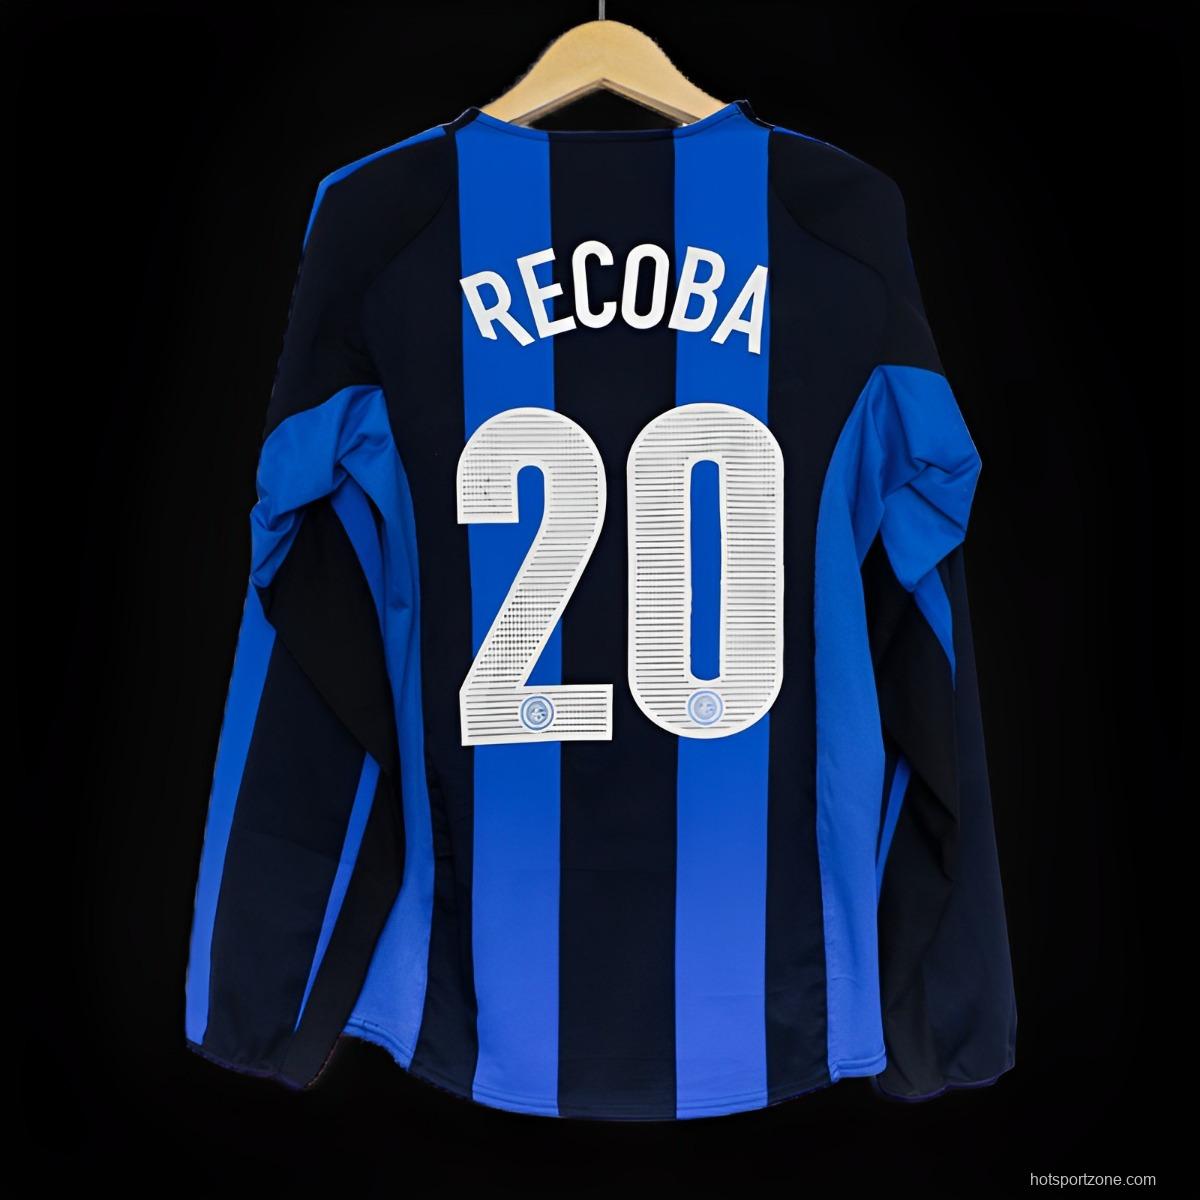 Retro 04/05 Inter Milan Home Long Sleeve Jersey